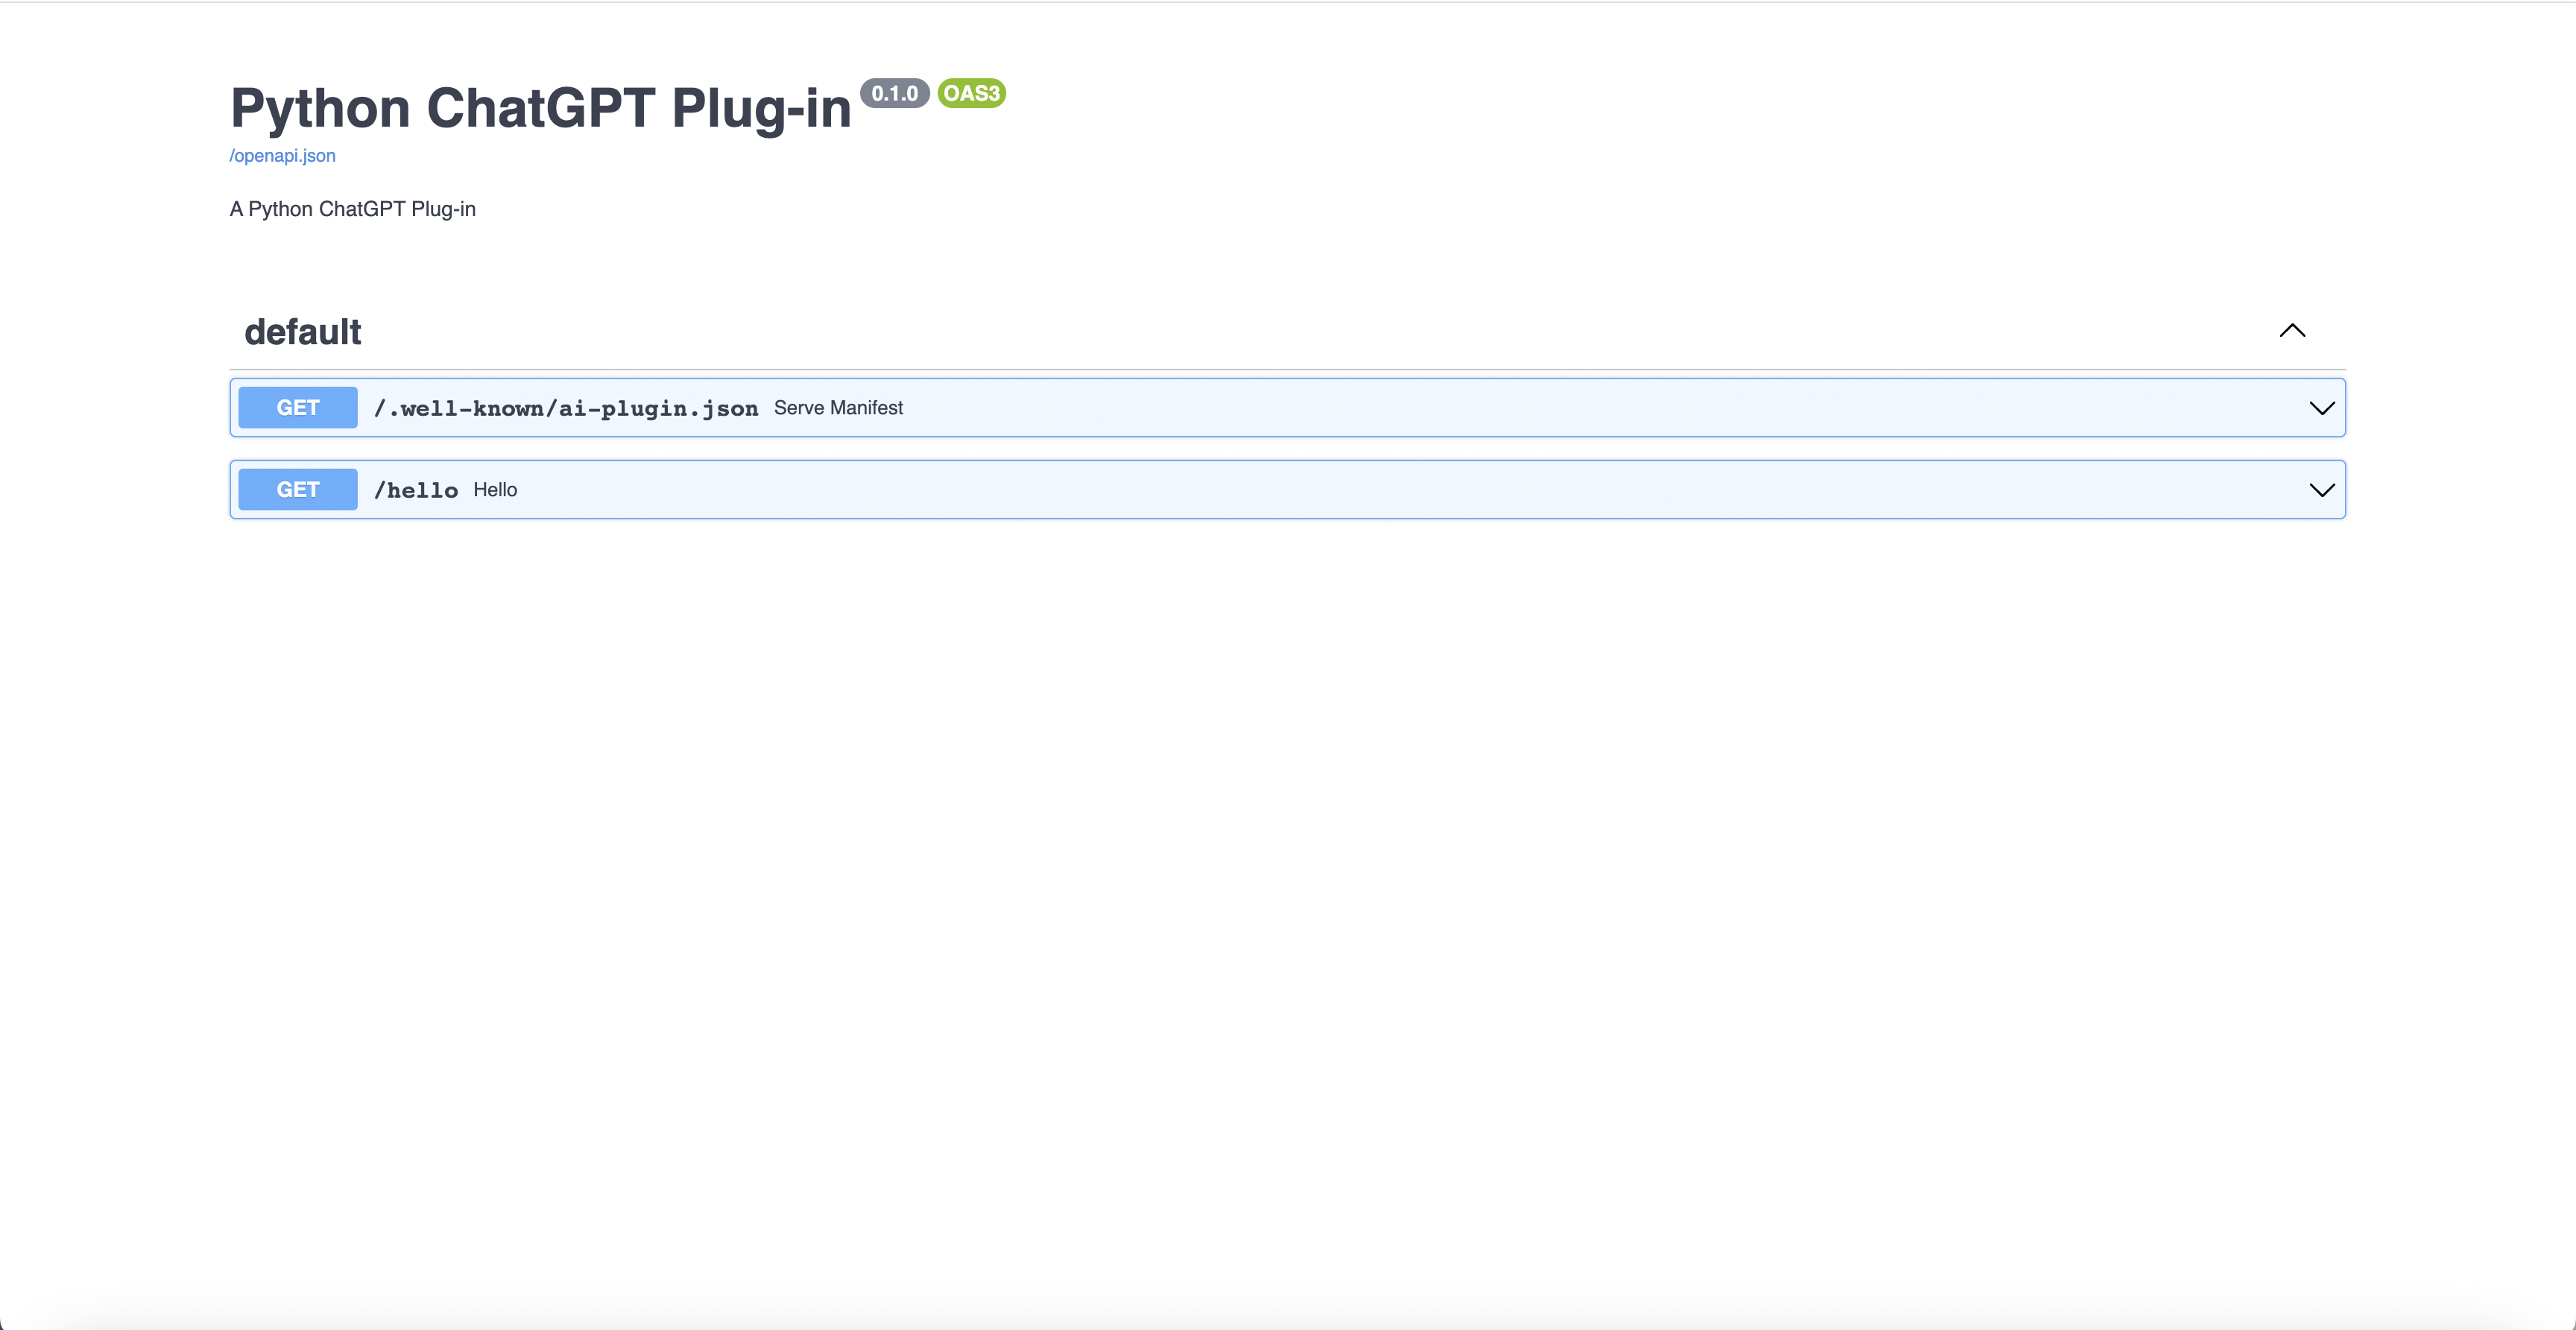 SwaggerUI documentation for your plugin